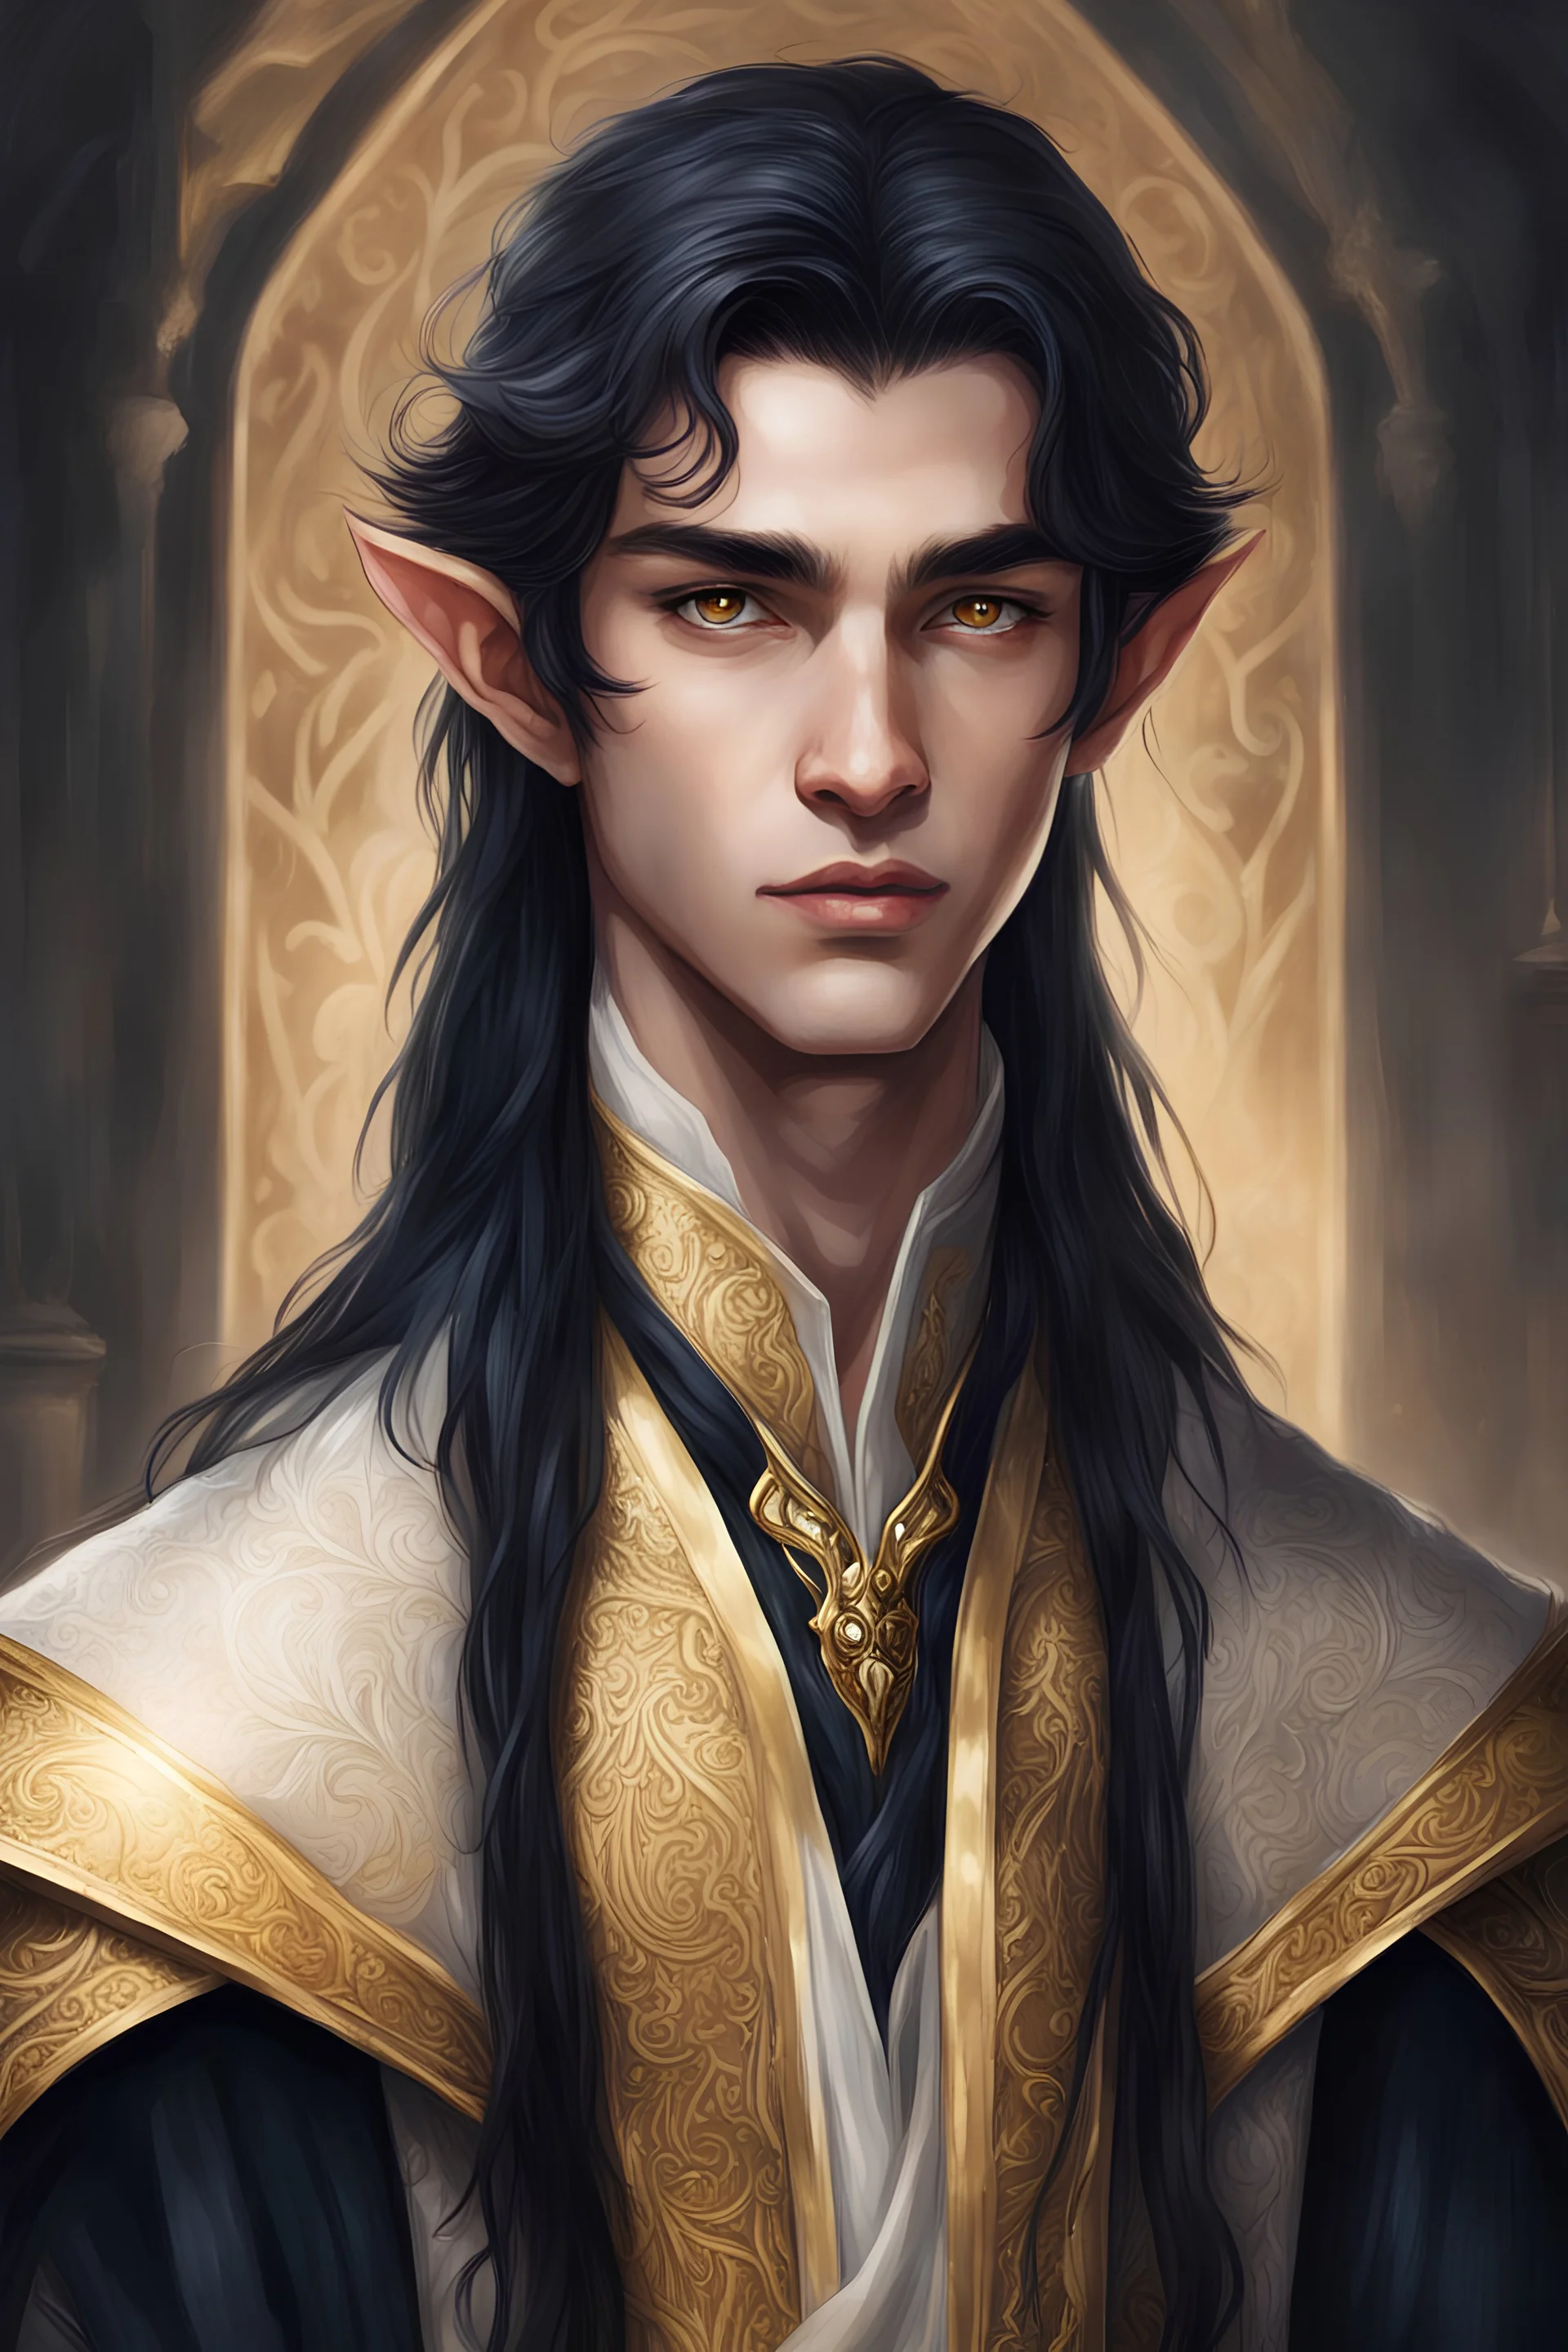 seventeen-year-old elven boy, golden eyes, long black hair, dressed in aristocratic robes.